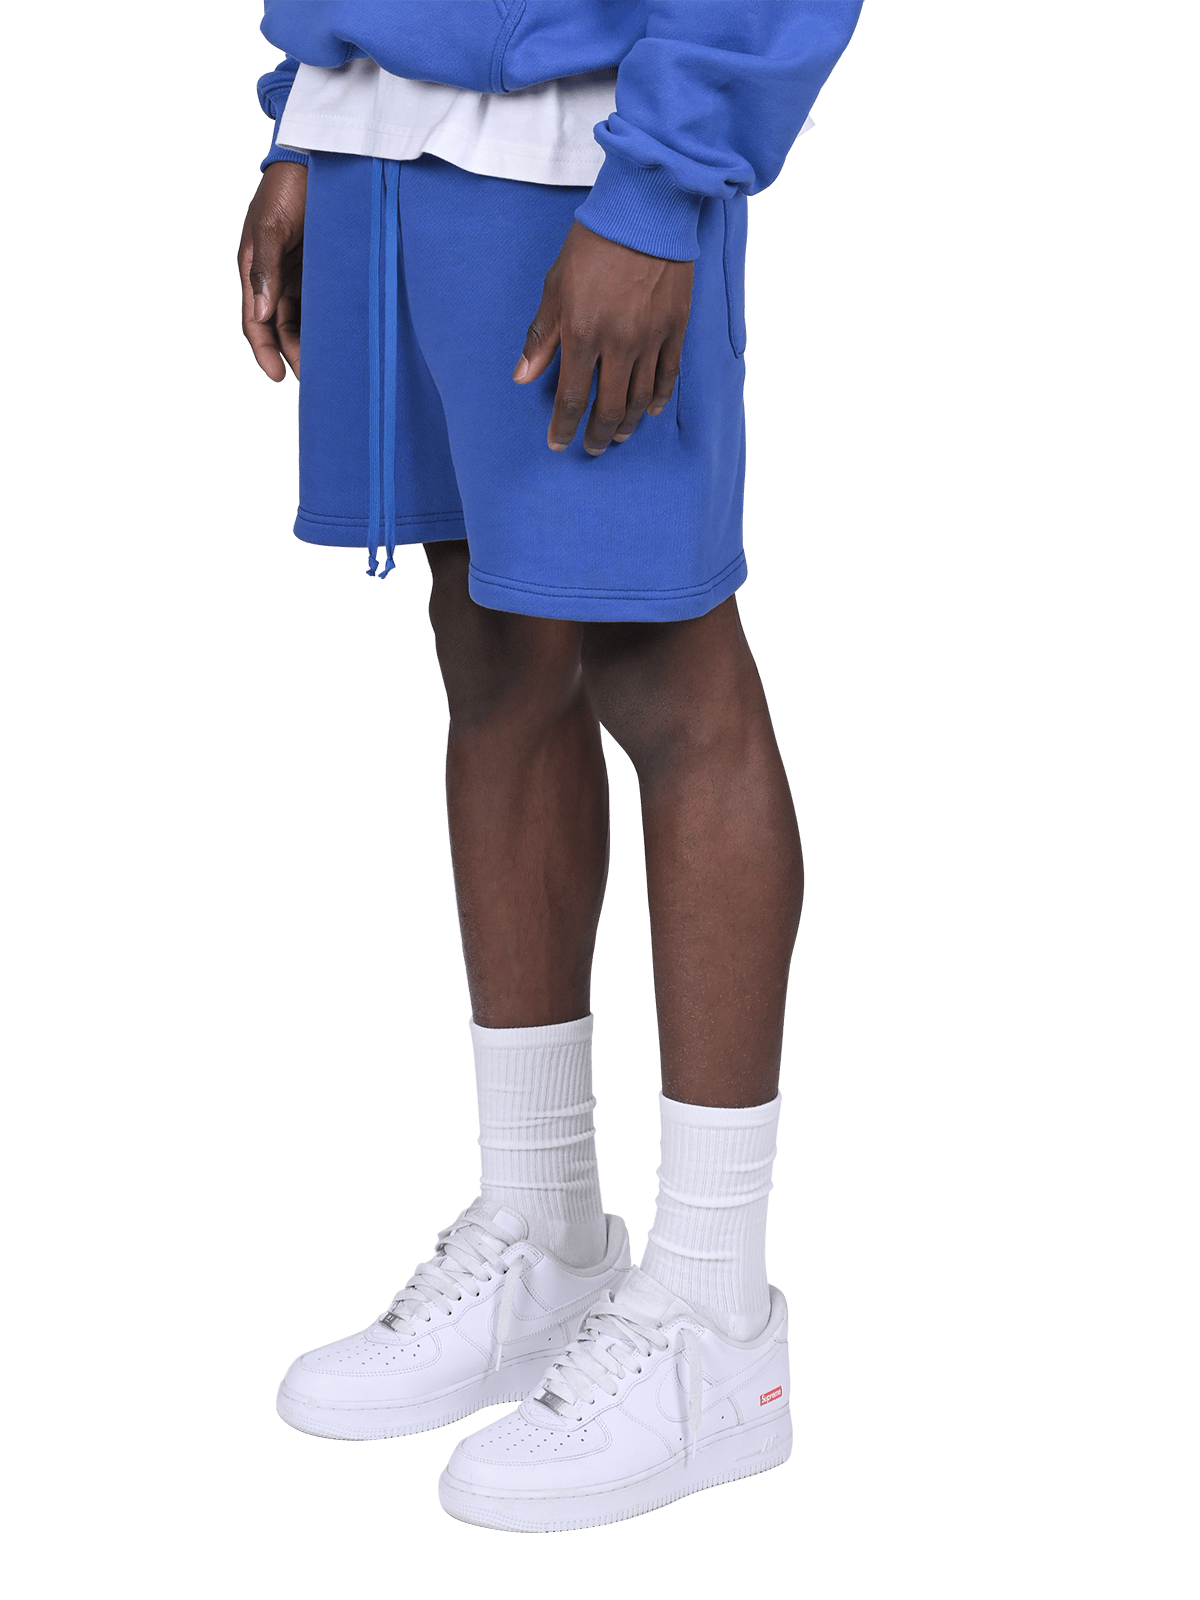 Necessity Shorts - Royal Blue